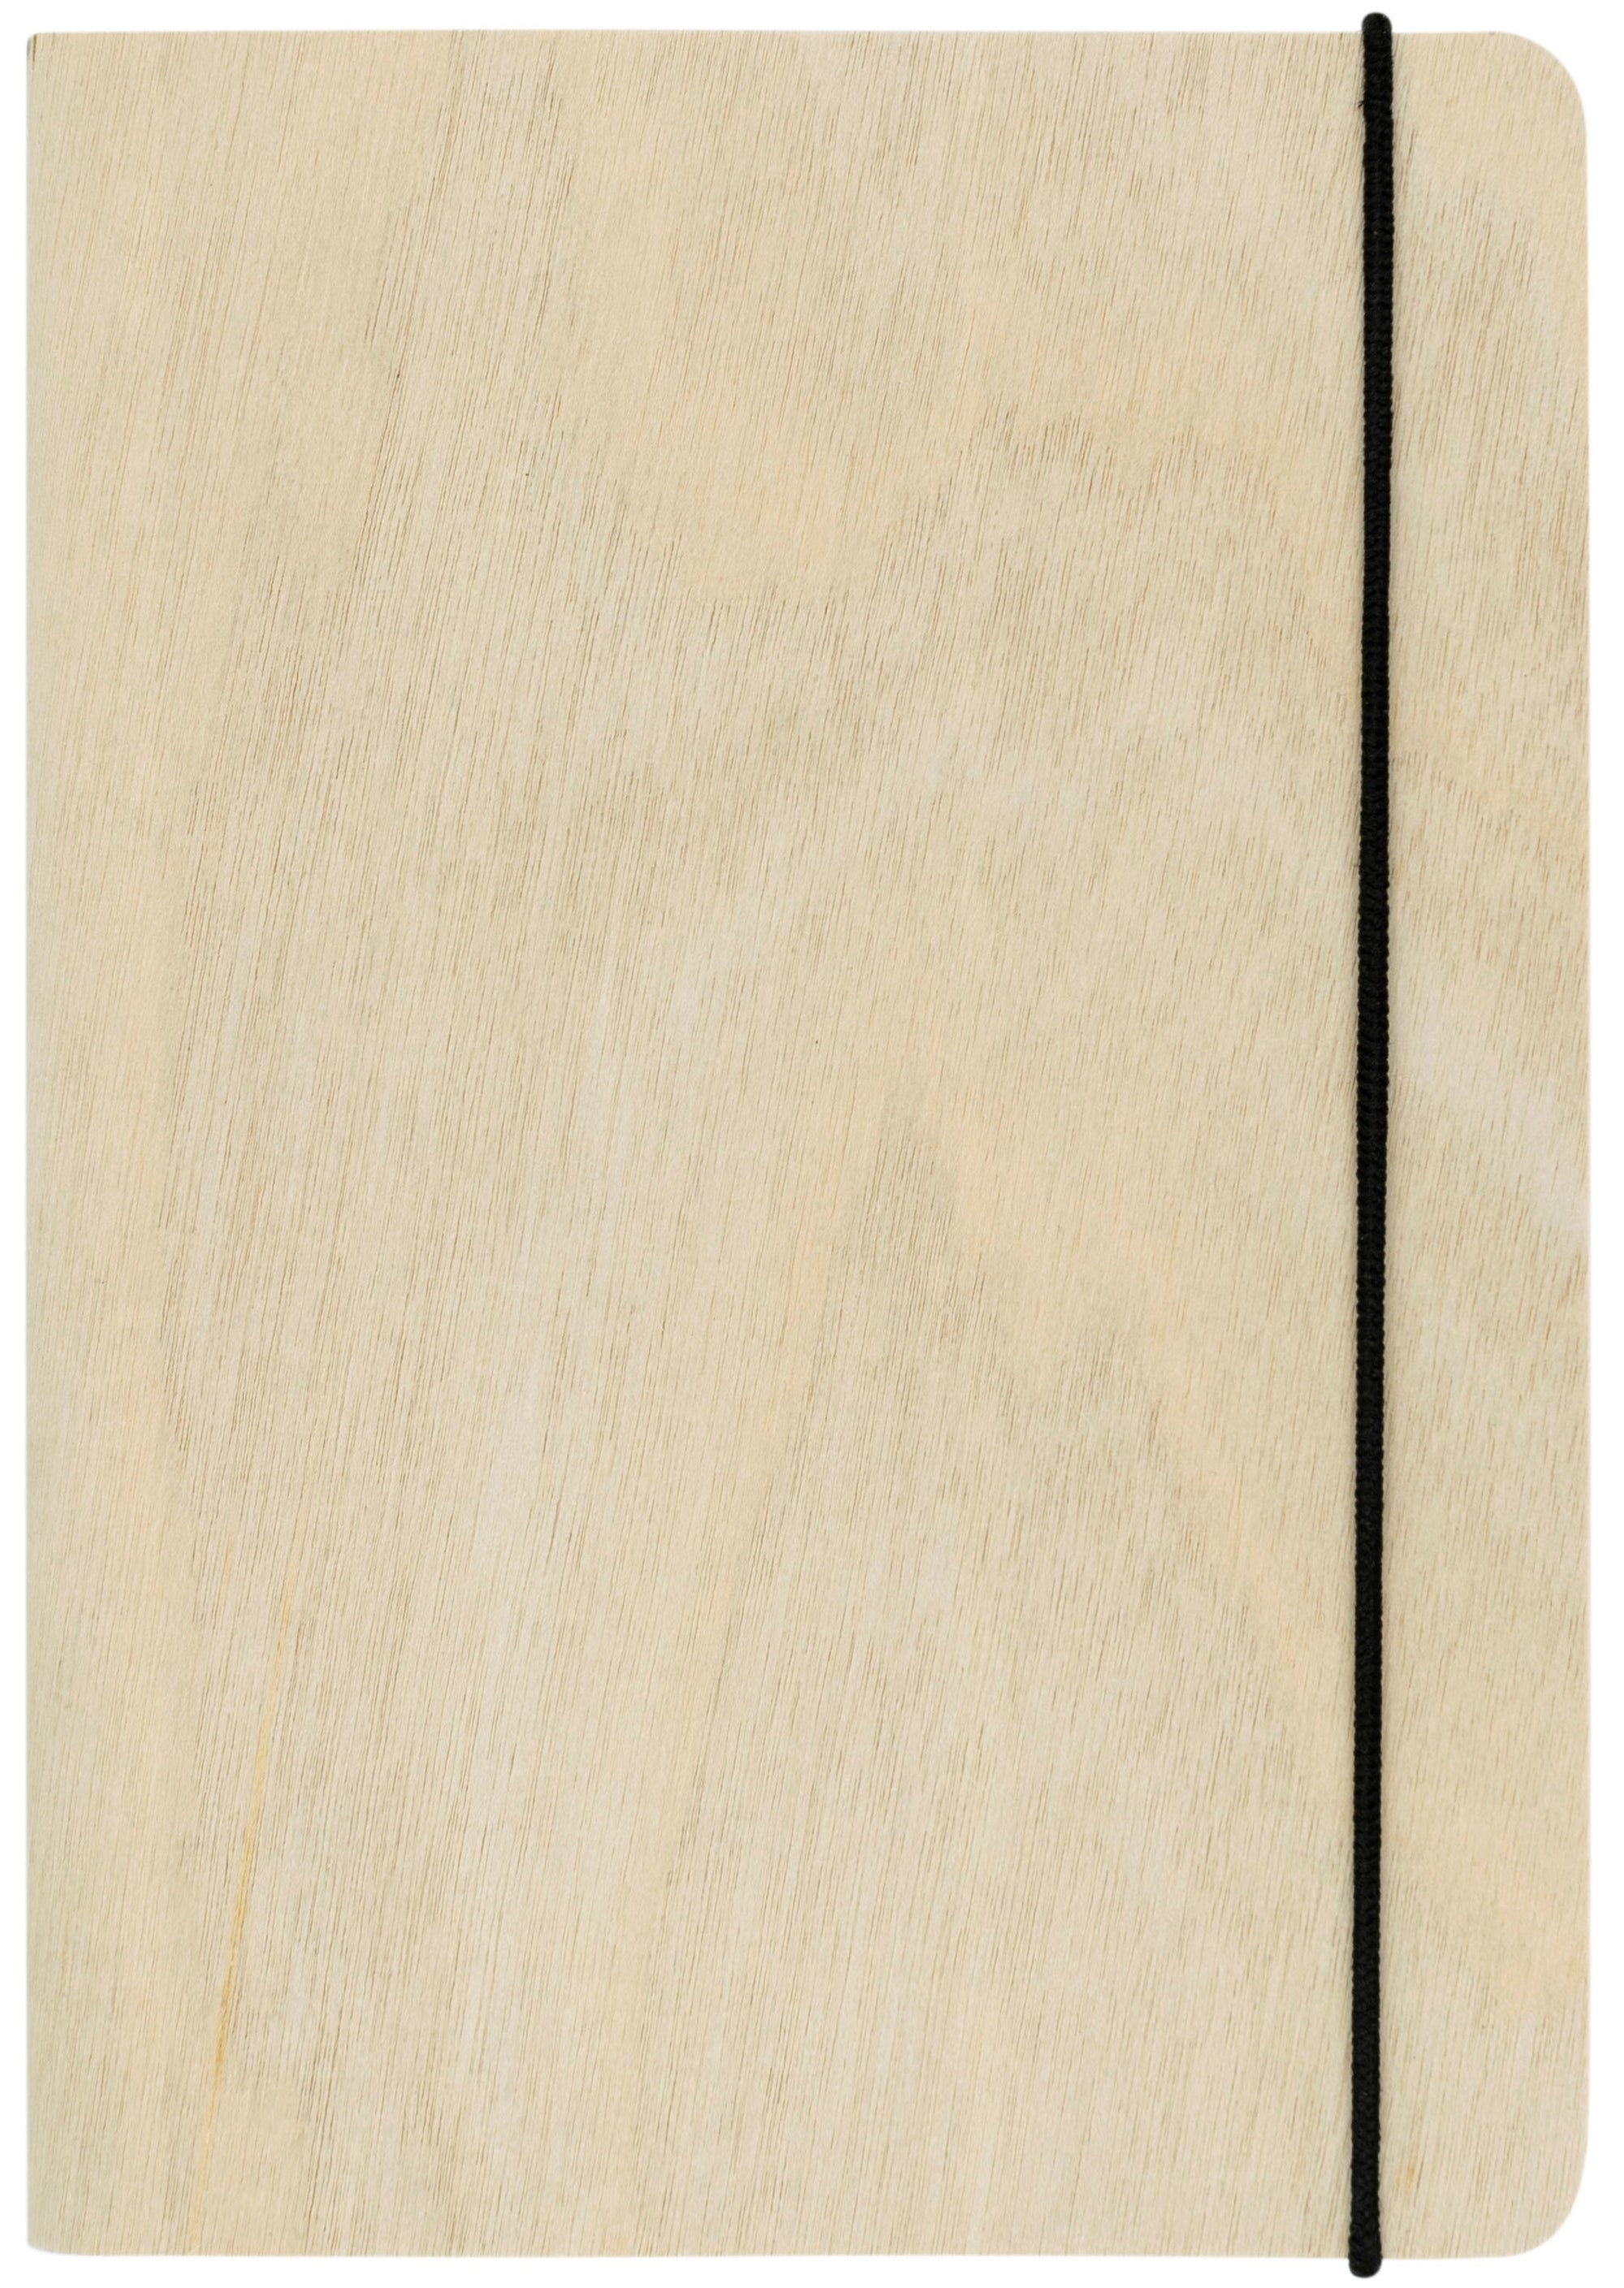 B6 Birch Wood Cover Notepad (Blank)